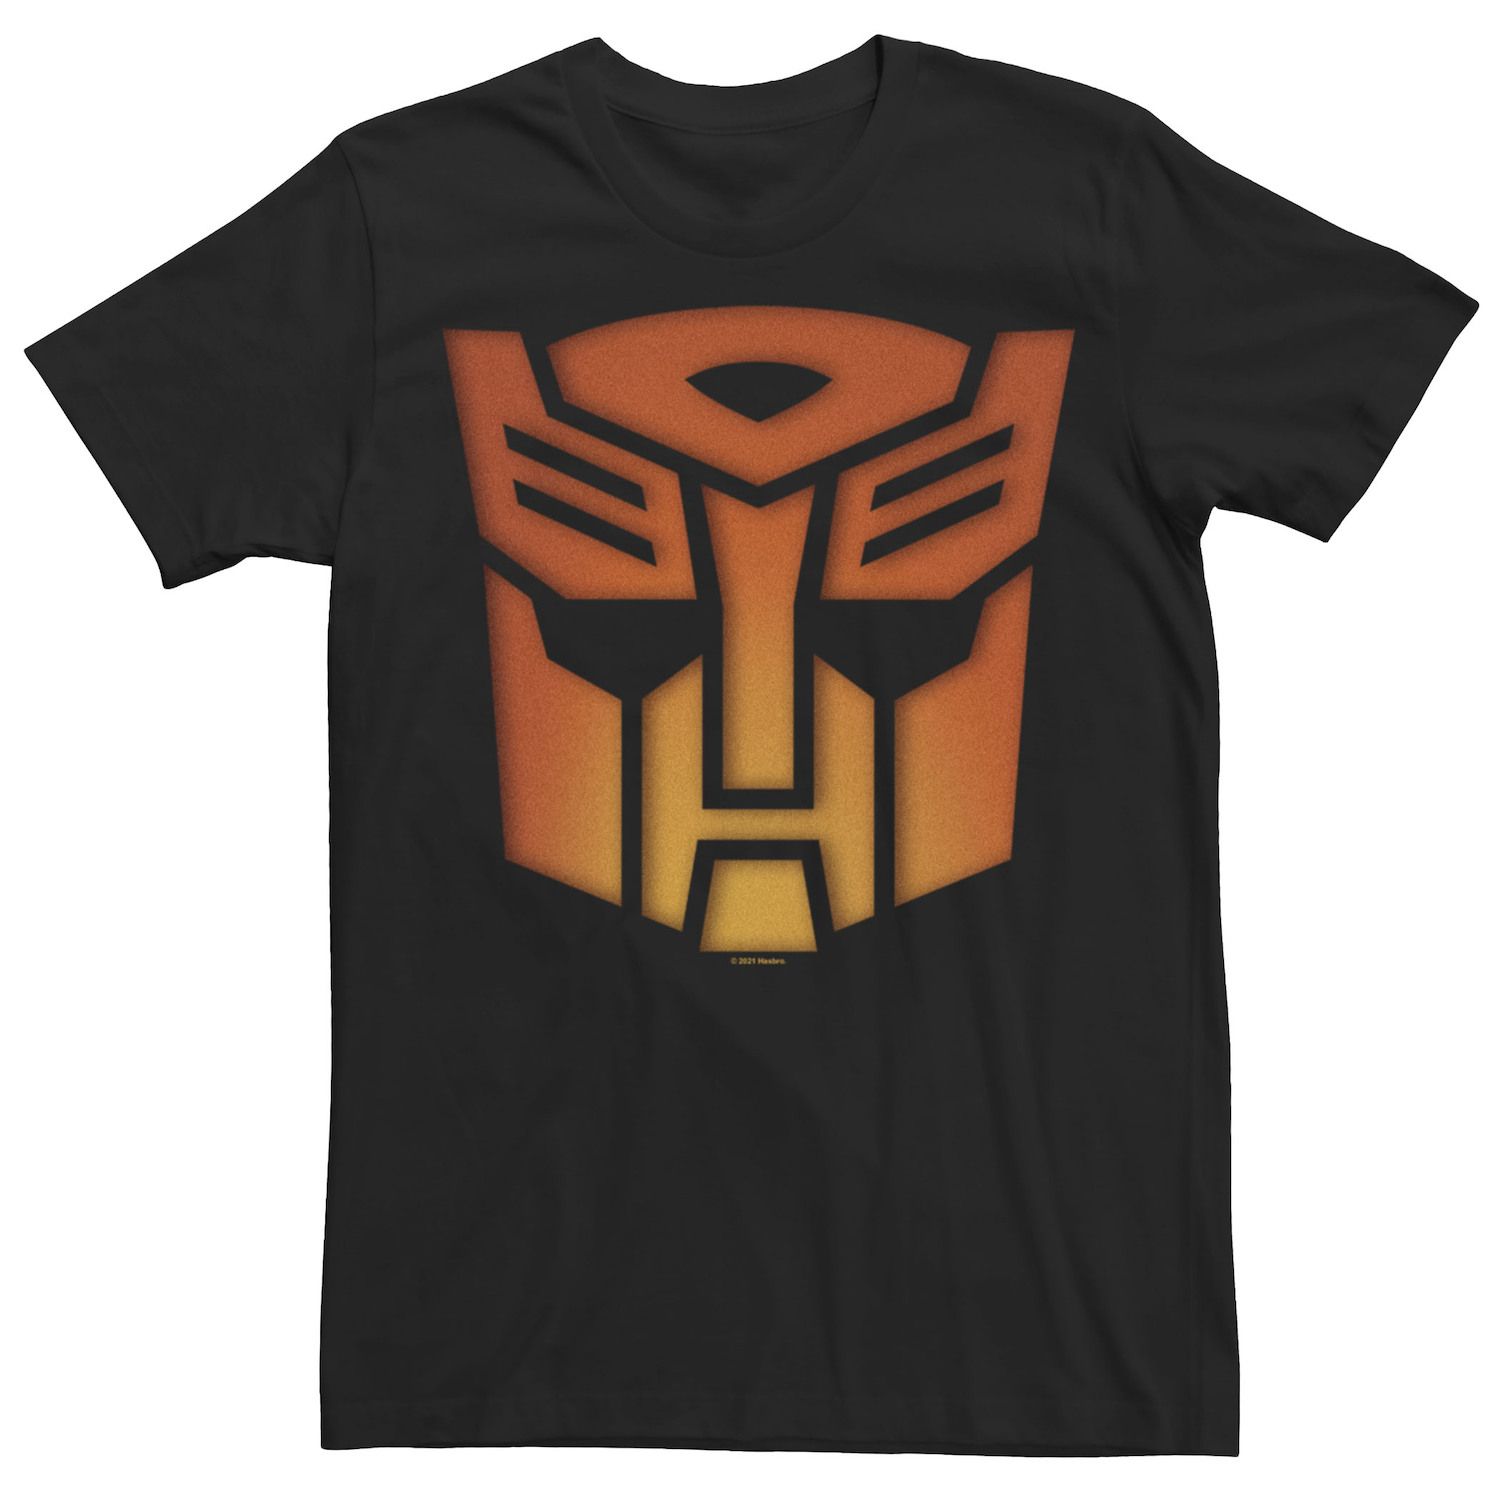 Мужская футболка Transformers Autobot со светящимся логотипом Licensed Character